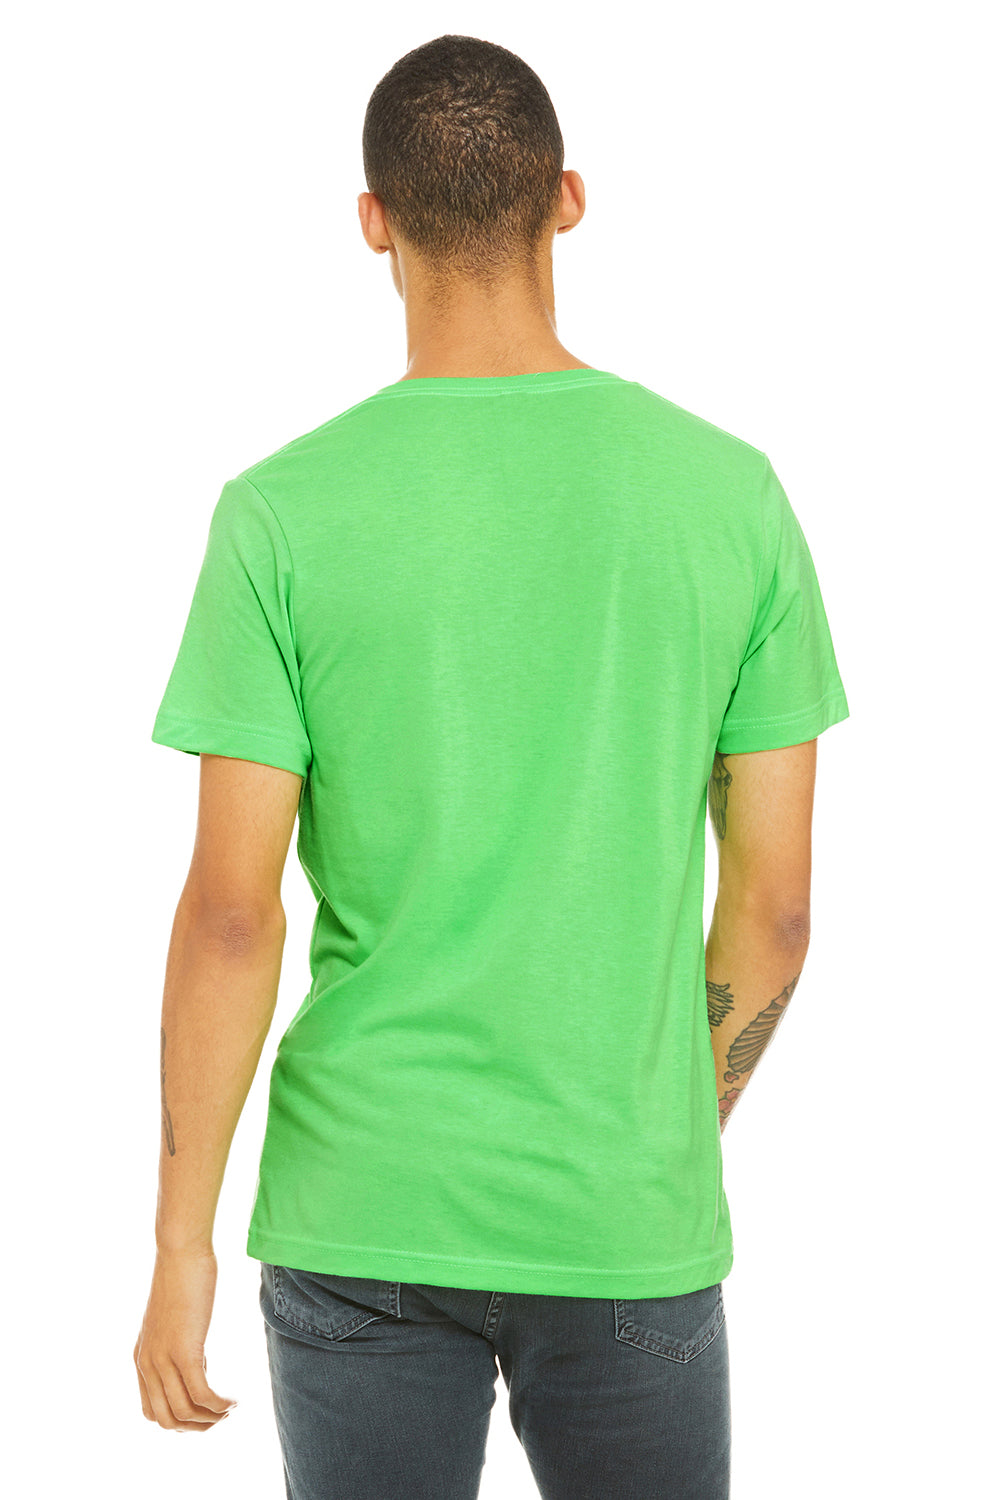 Bella + Canvas 3005 Mens Jersey Short Sleeve V-Neck T-Shirt Neon Green Back